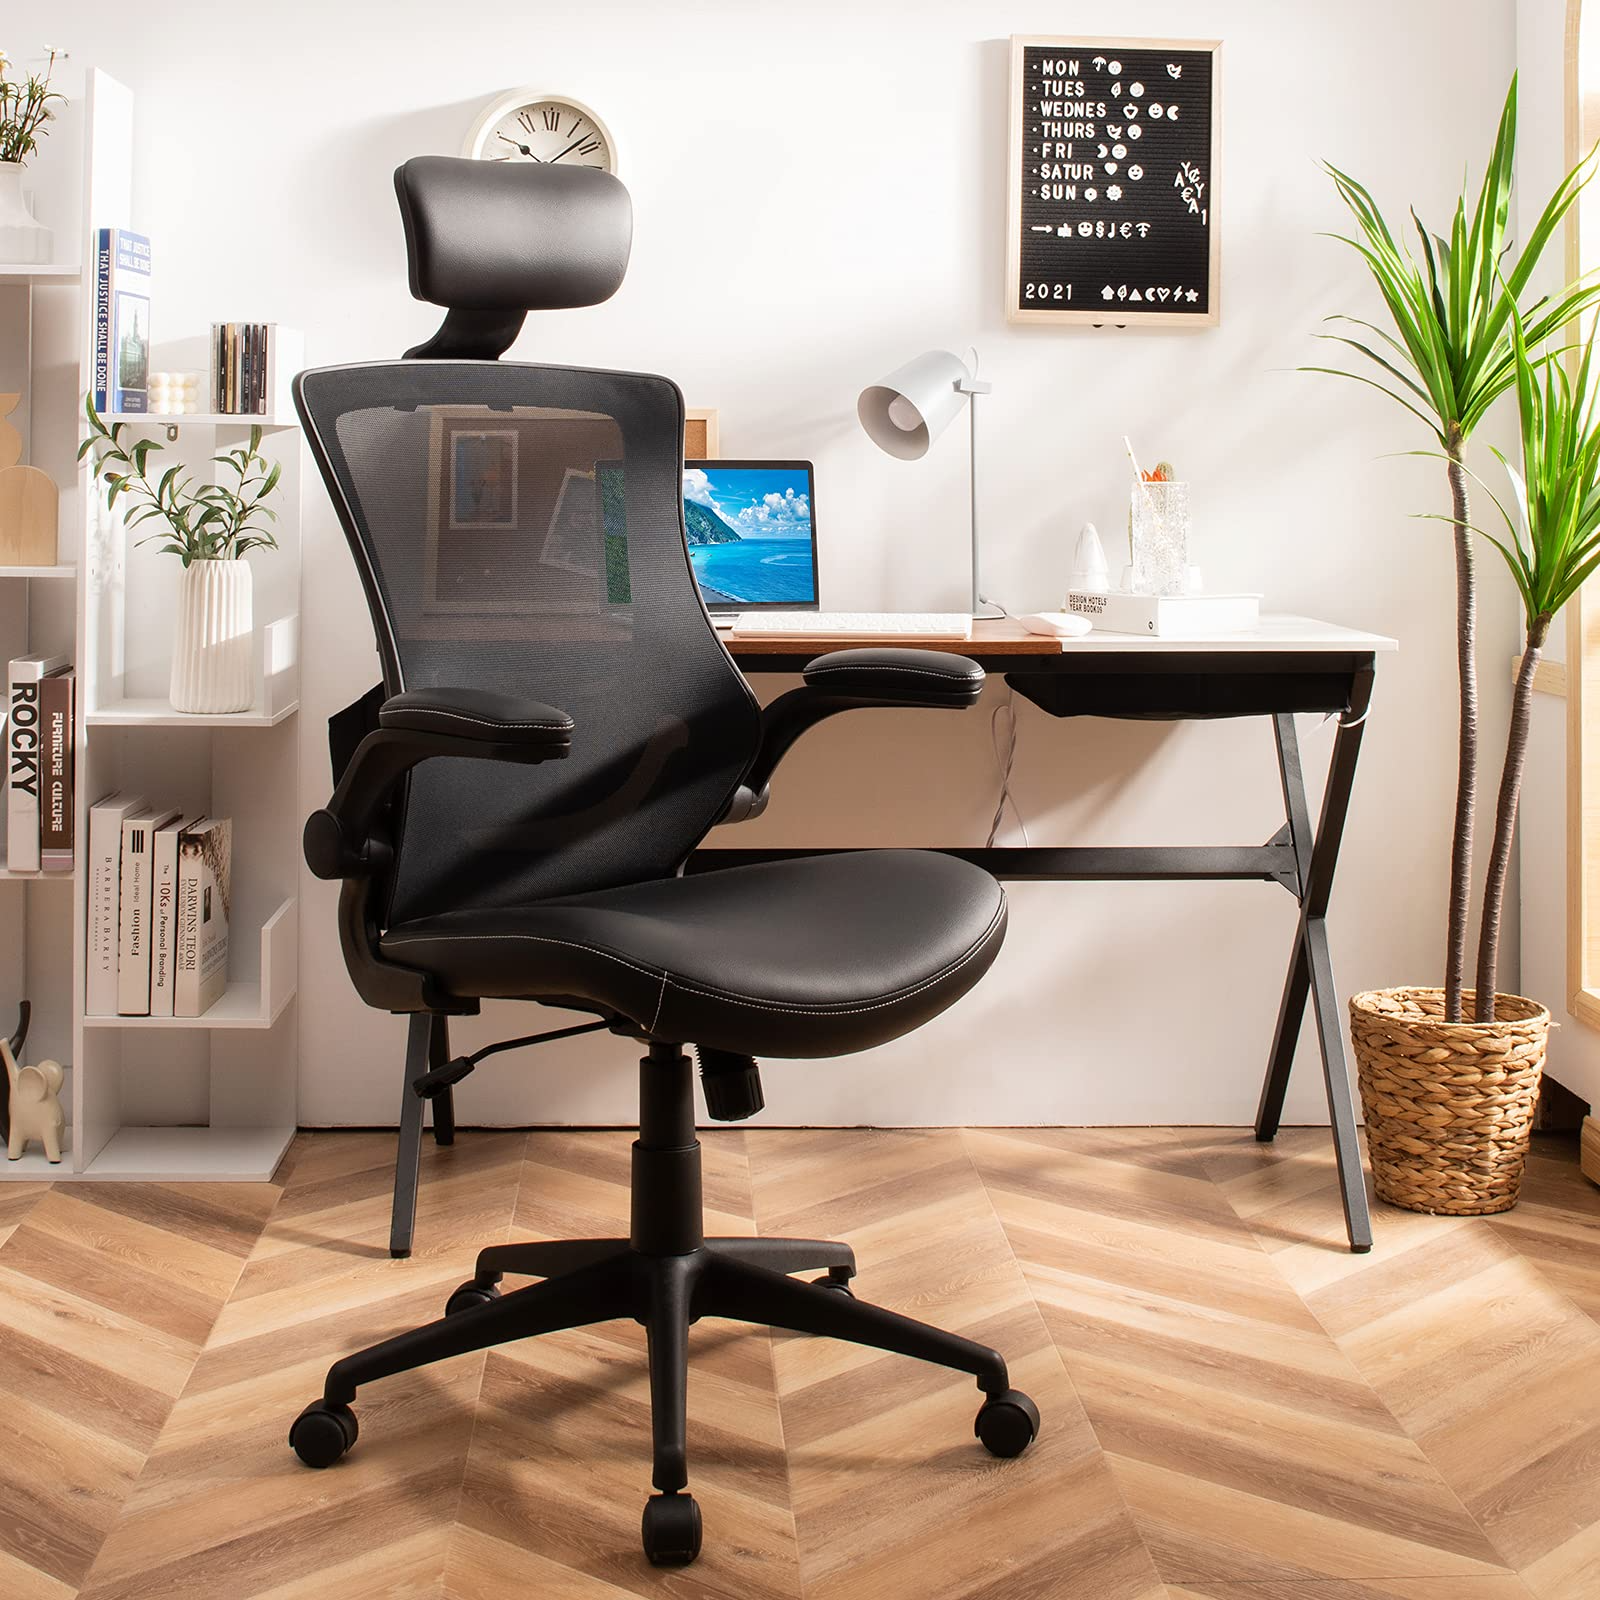 Giantex High Back Office Chair w/Flip up Armrest